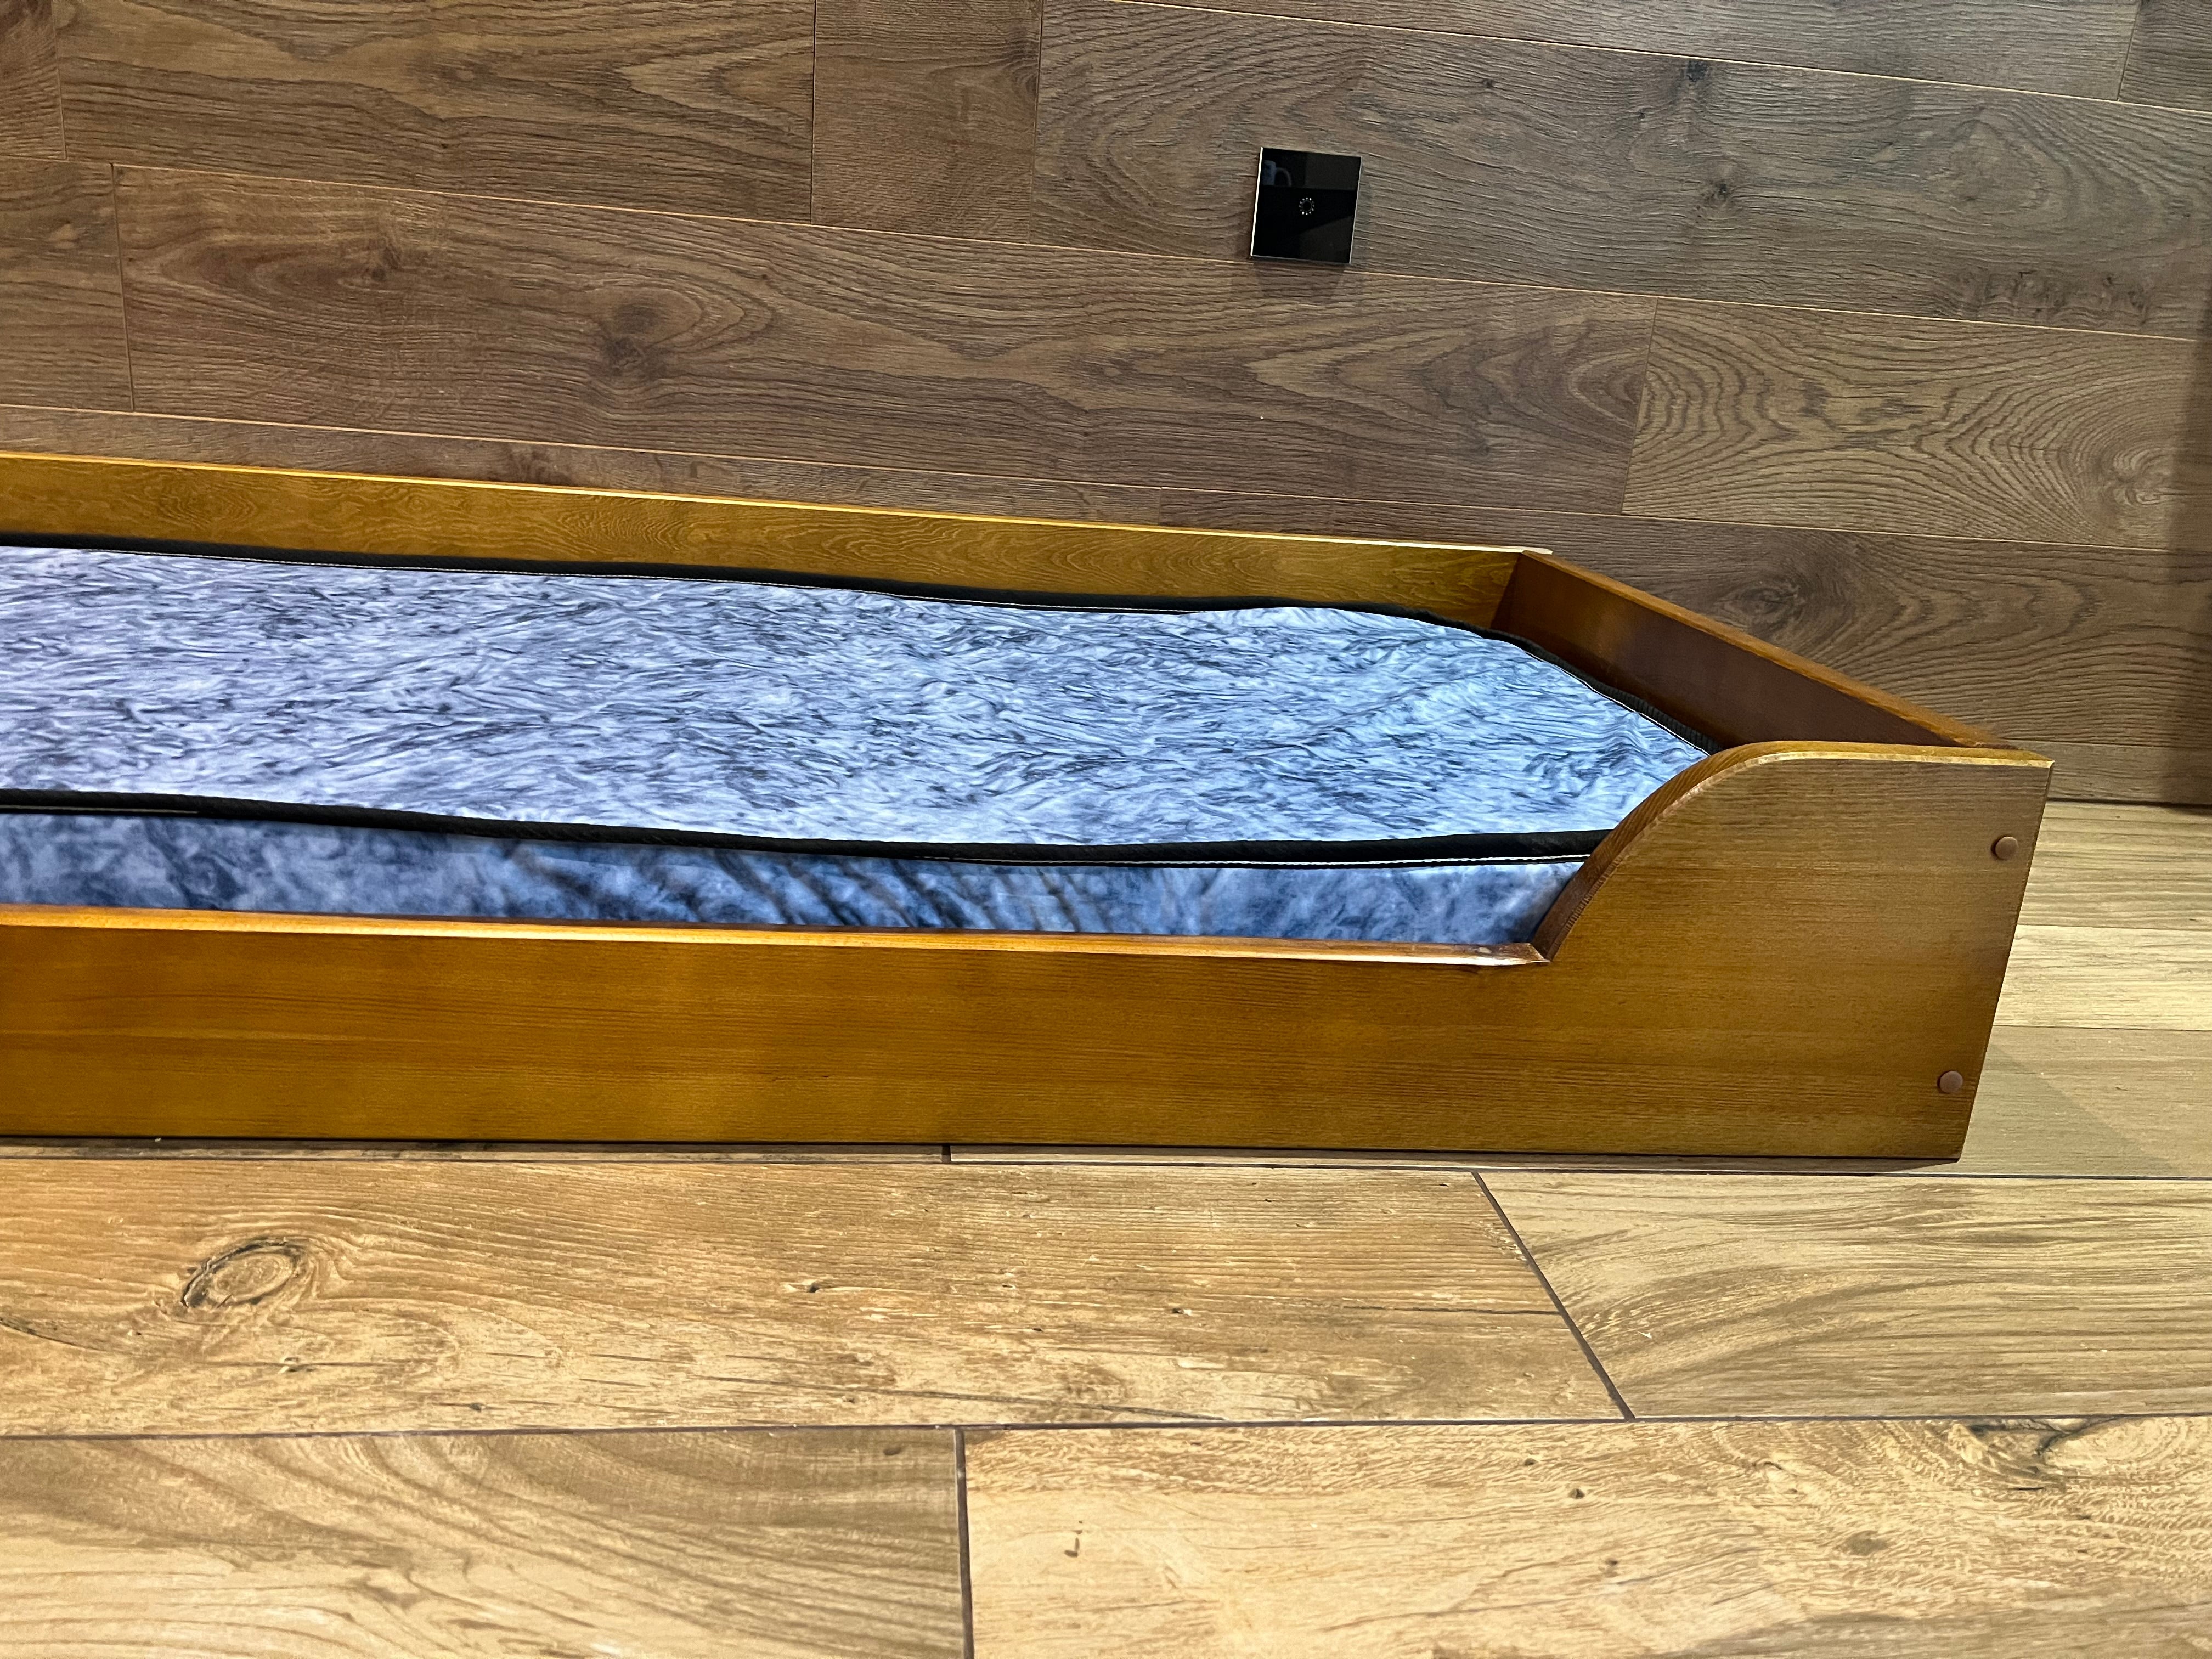 Wooden Bed Frame For Pets - Large